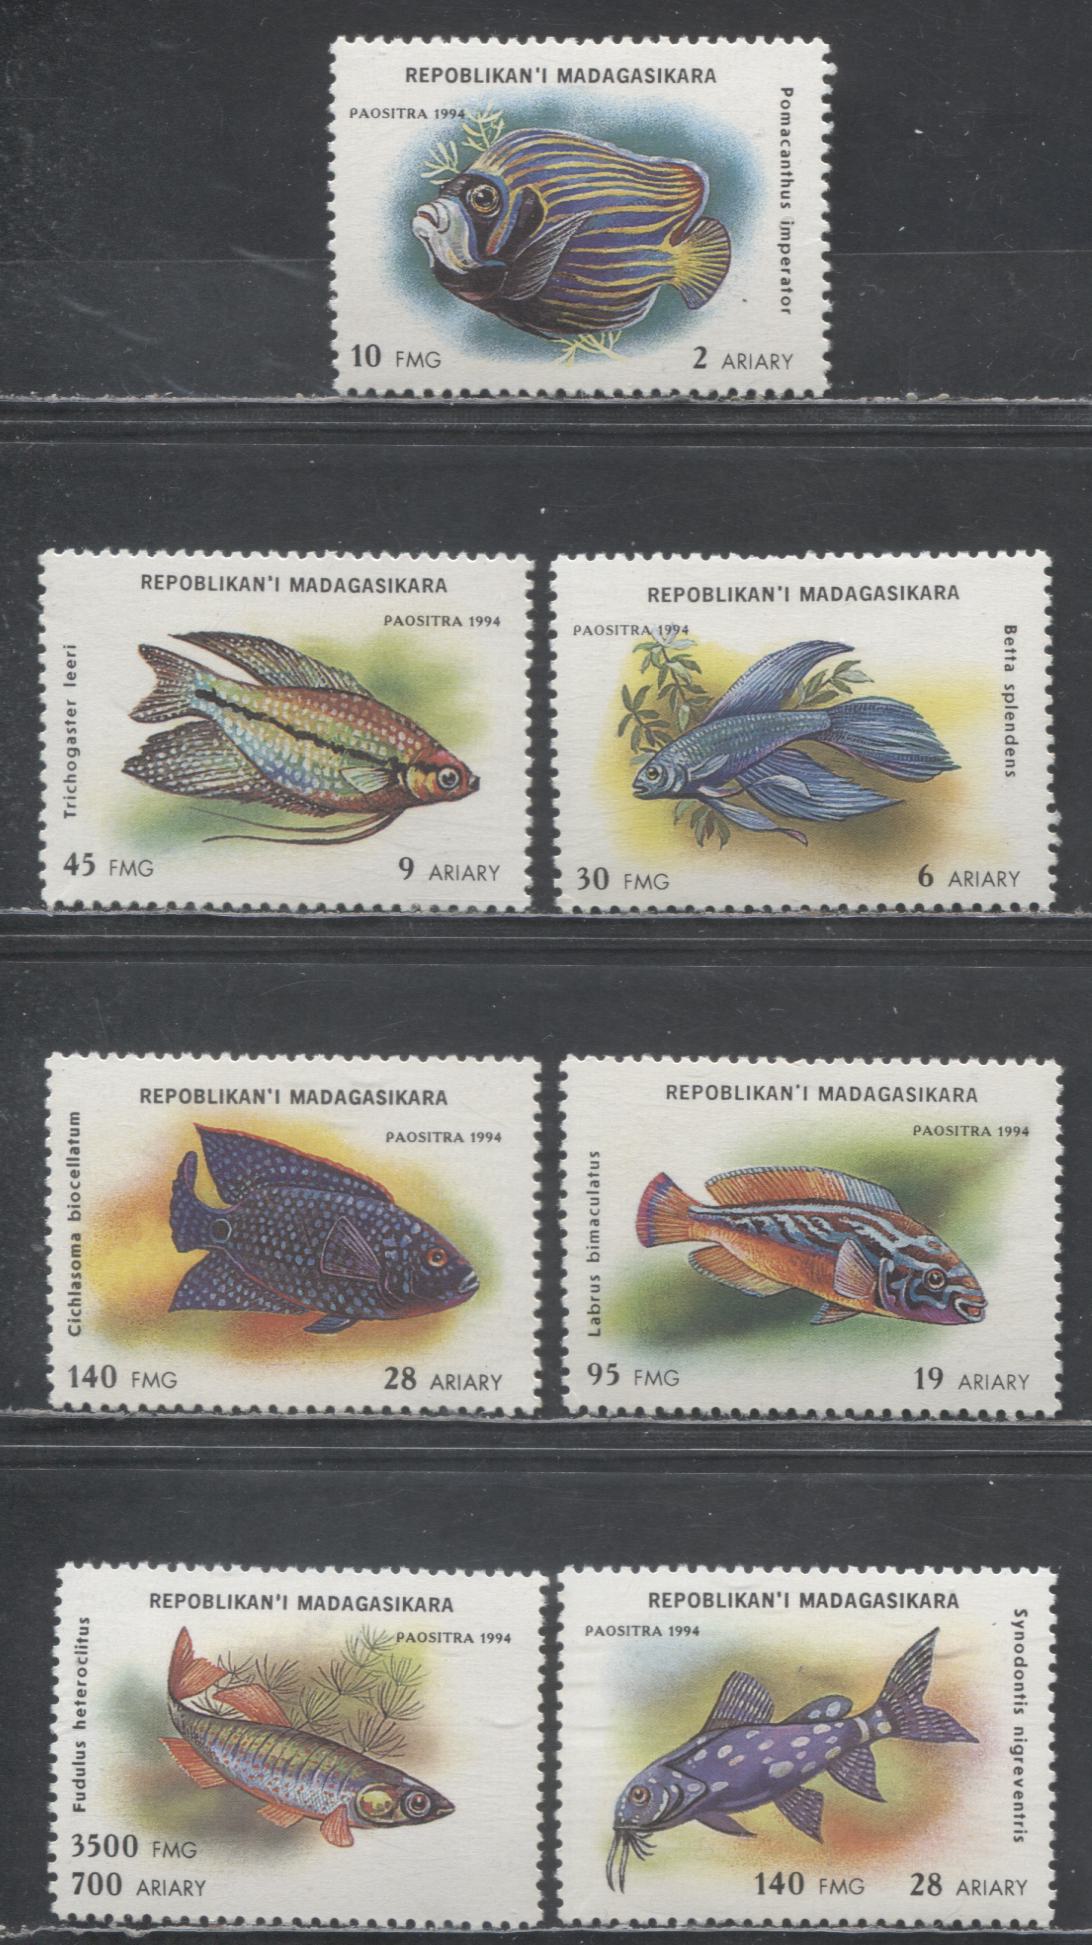 Lot 76 Madagascar SC#1192-1198 1994 Aquarium Fish Issue, 7 VFOG Singles, Click on Listing to See ALL Pictures, 2017 Scott Cat. $5.75